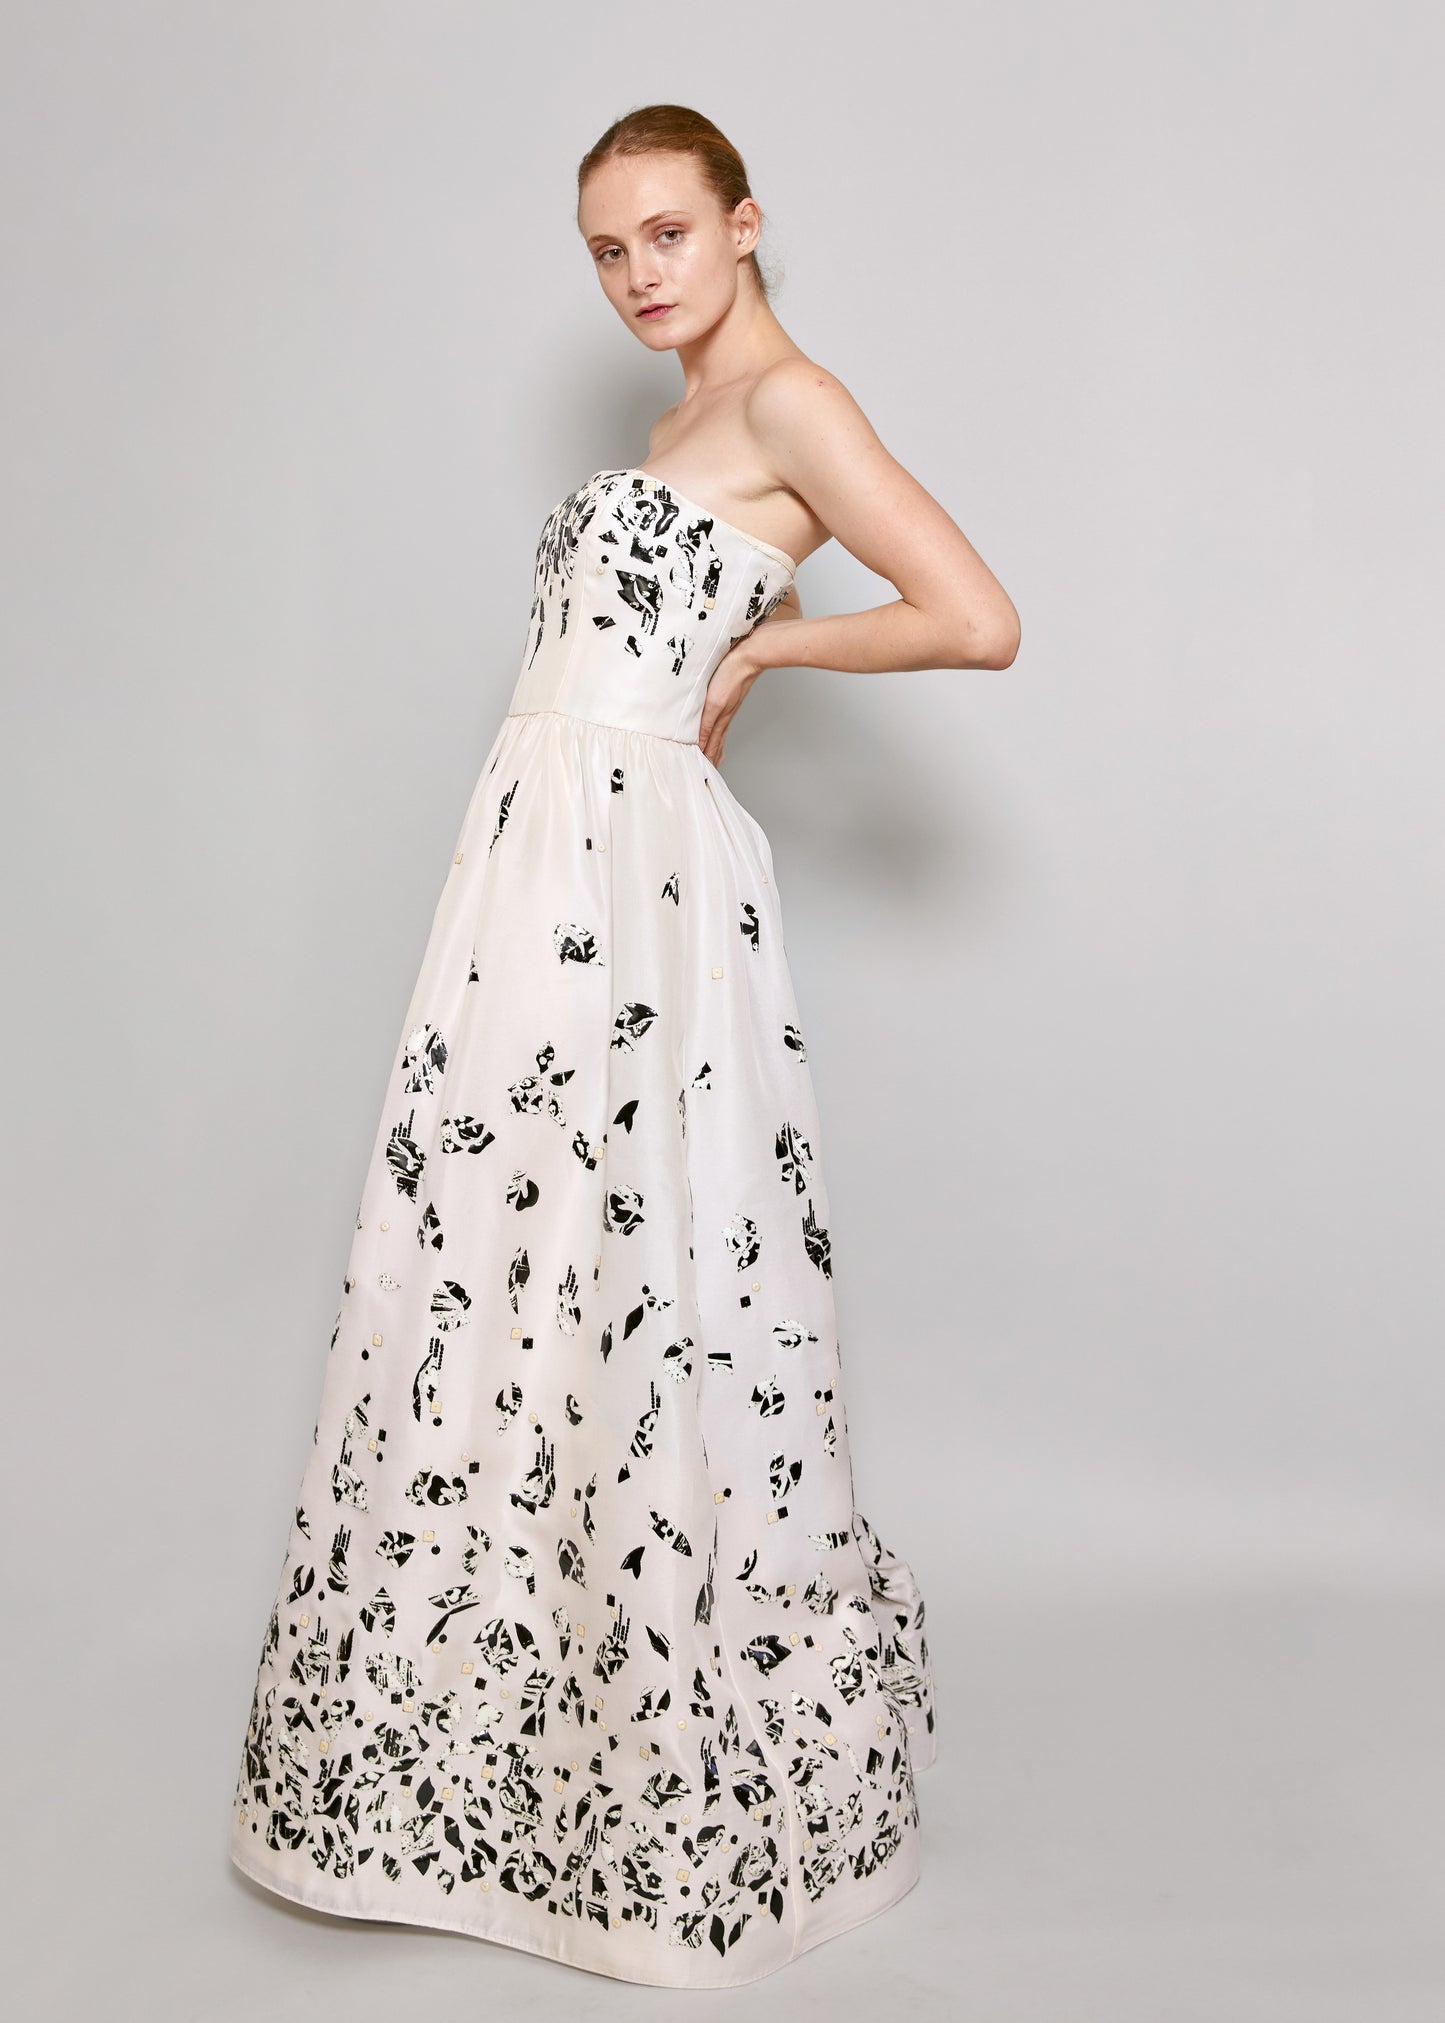 Oscar De La Renta White Strapless Gown with Ornamentation Resort 2010